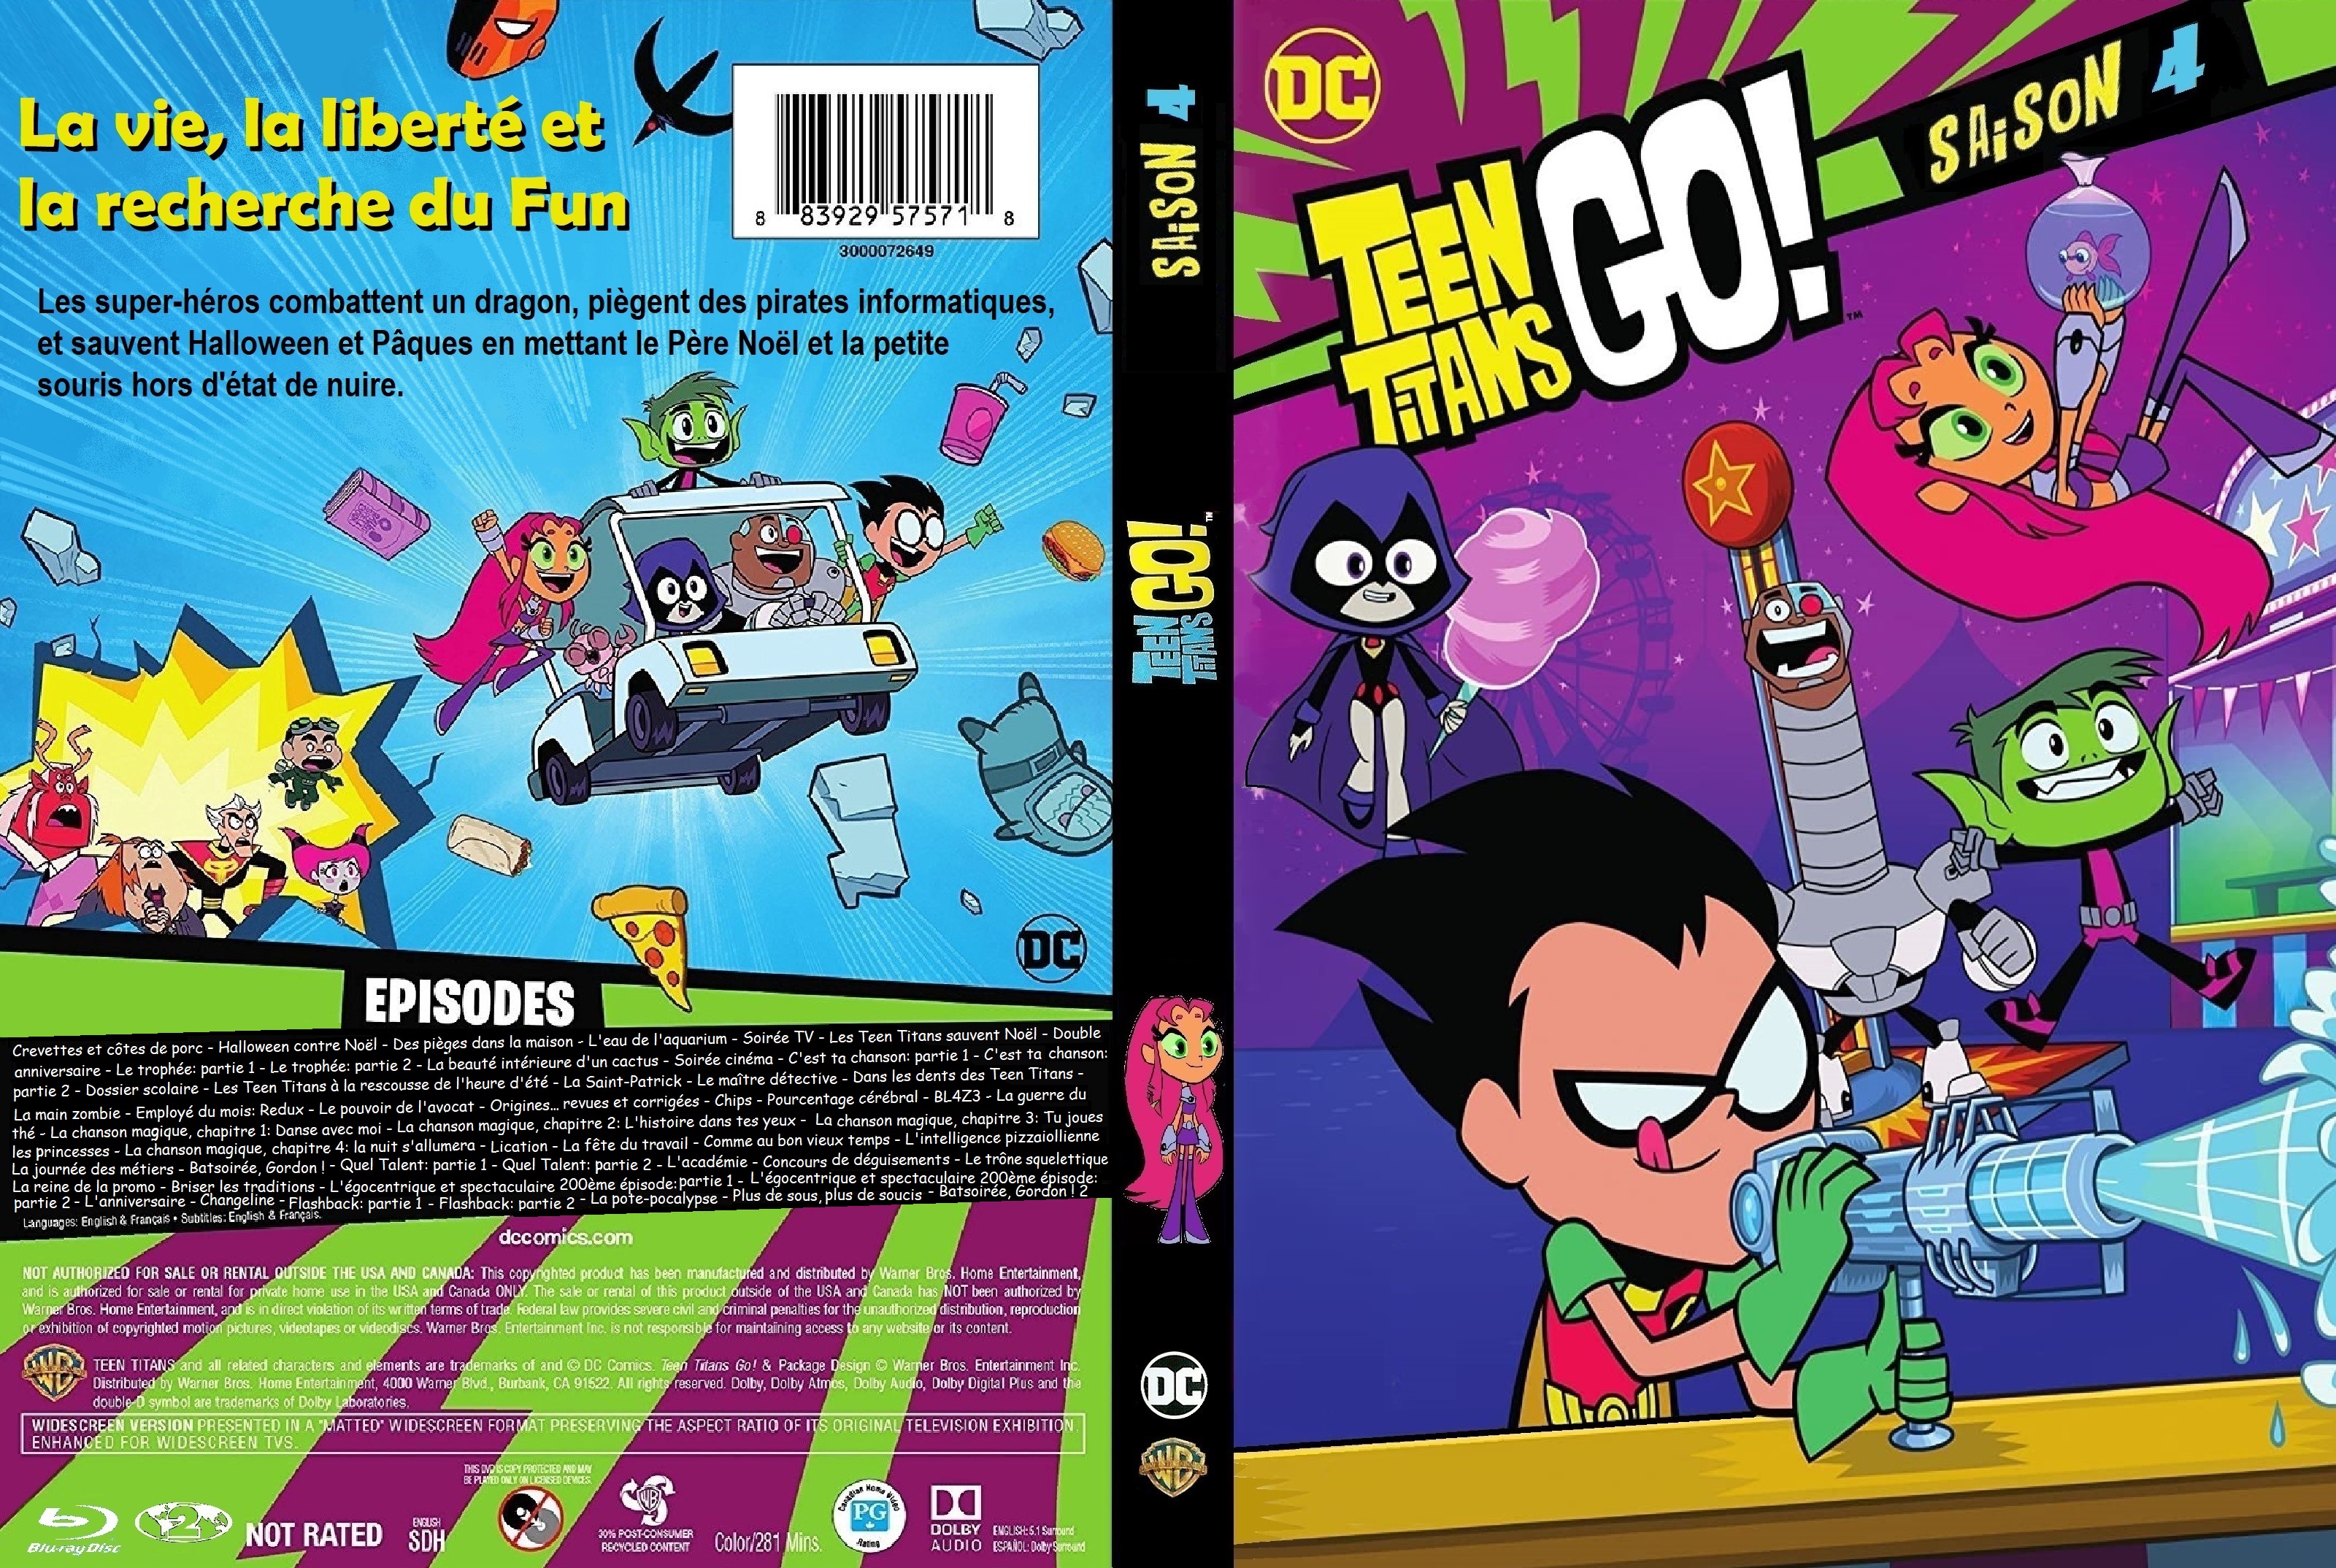 Jaquette DVD Teen Titans Go! saison 4 custom